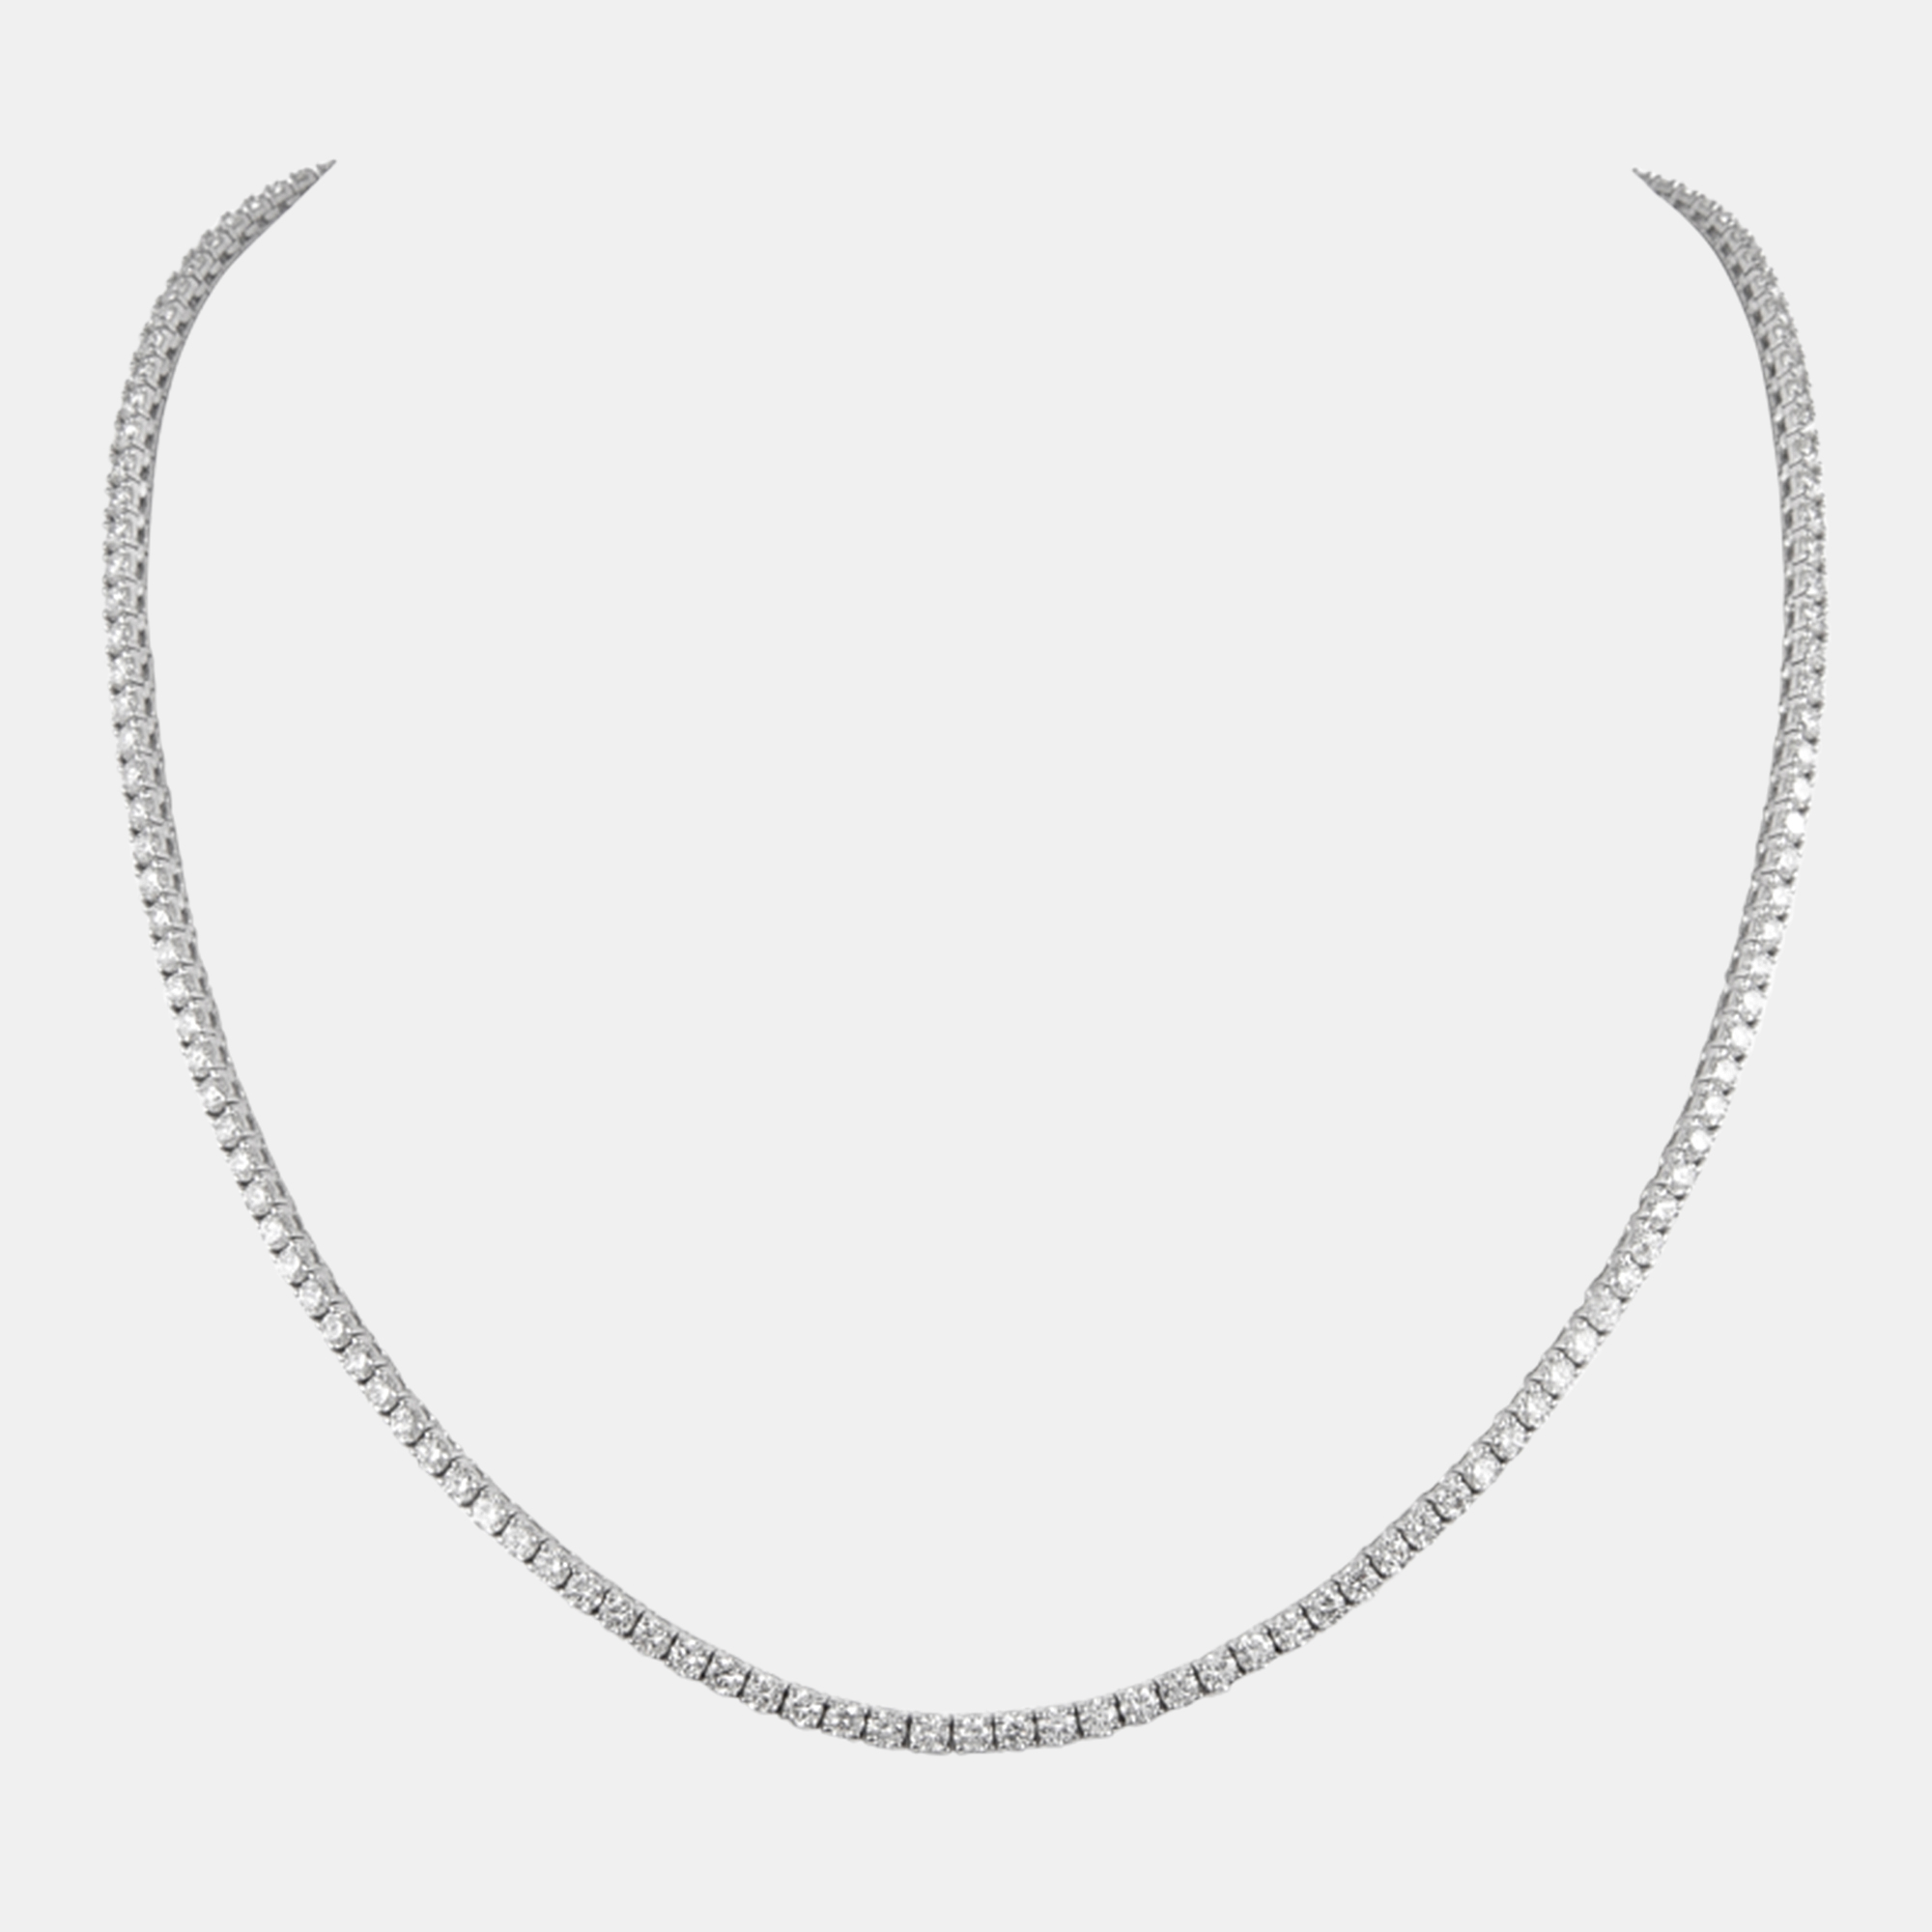 The diamond edit 18k white gold diamond 0.05 ct. (each) tennis necklace